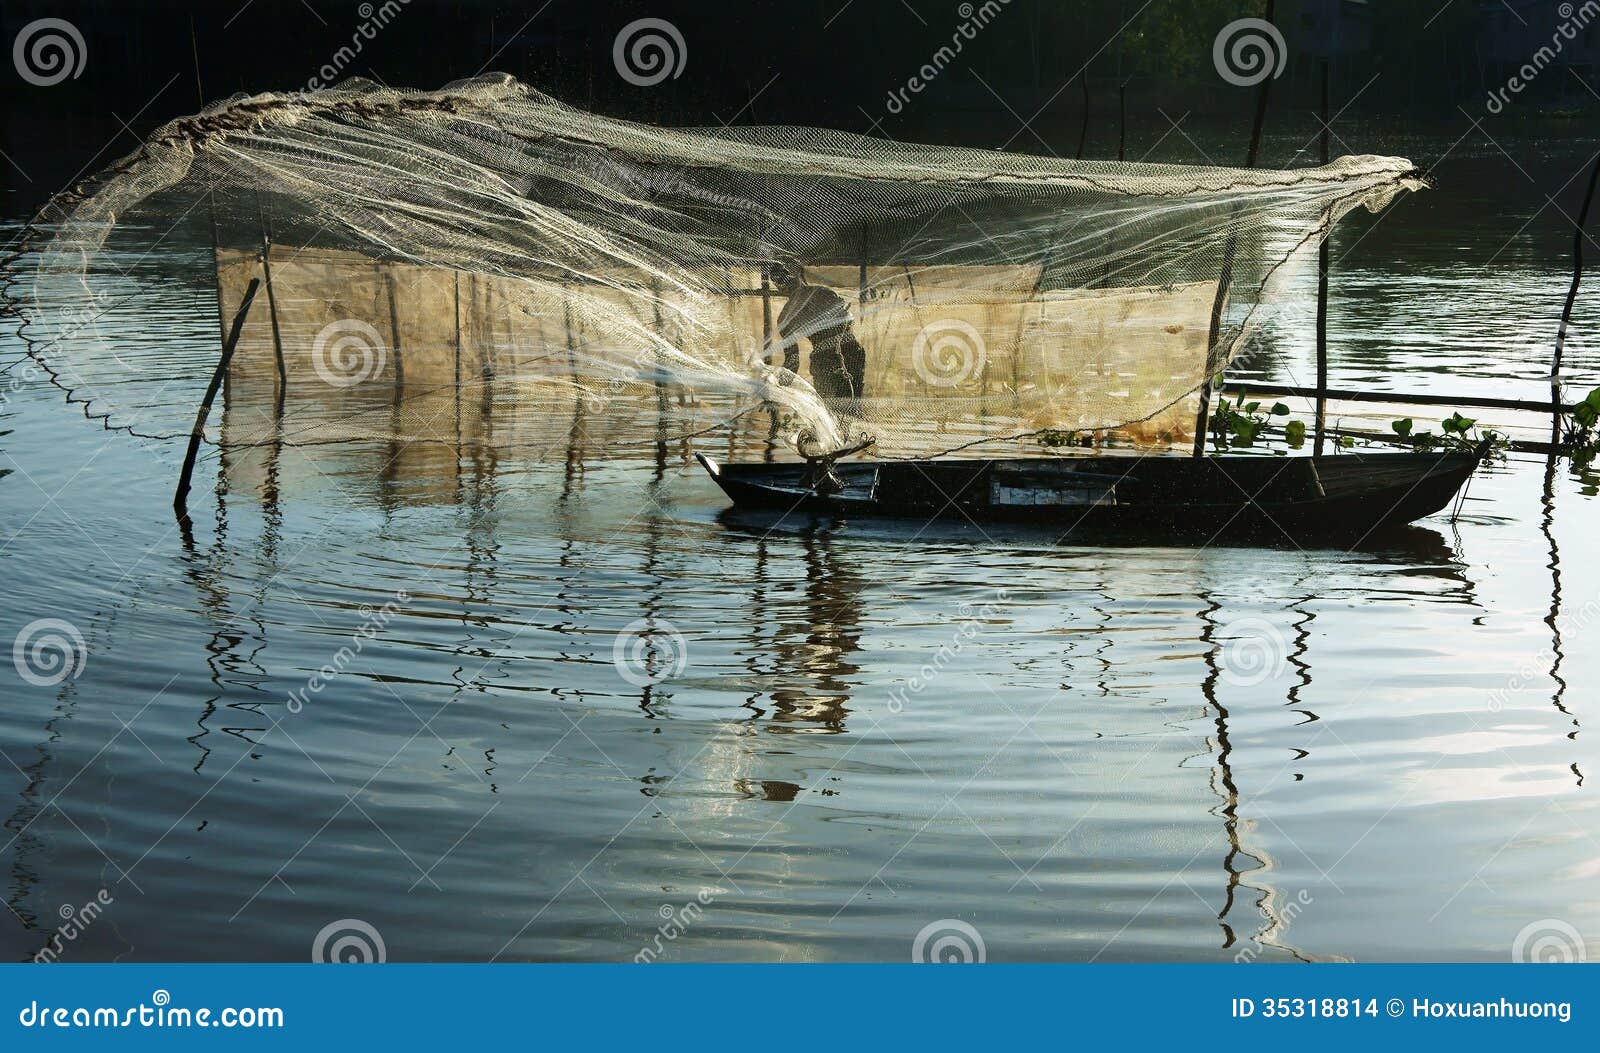 471 Fisherman Cast Net River Stock Photos - Free & Royalty-Free